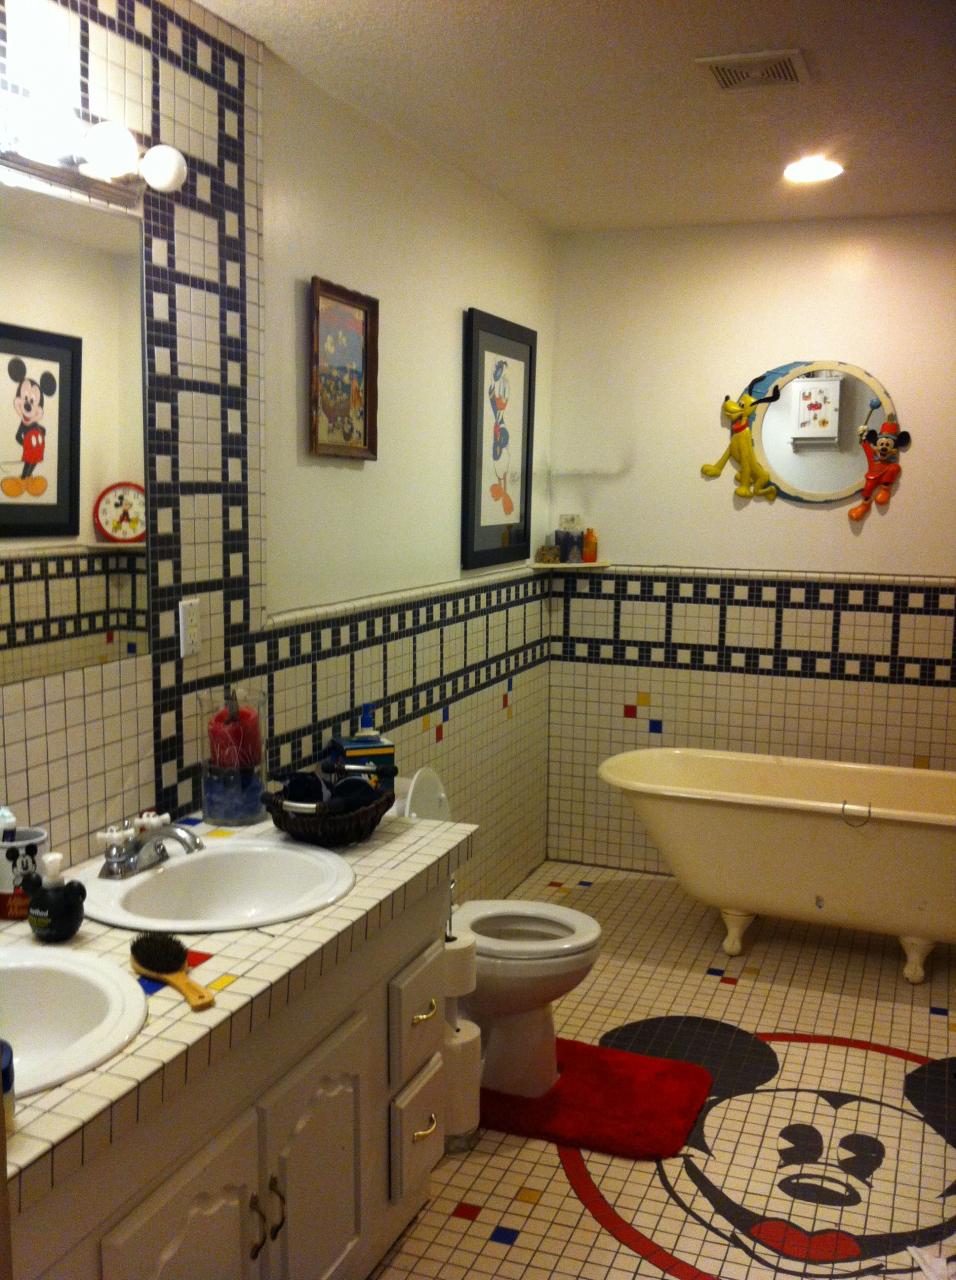 Mickey Mouse bathroom Mickey mouse bathroom, Disney bathroom, Disney